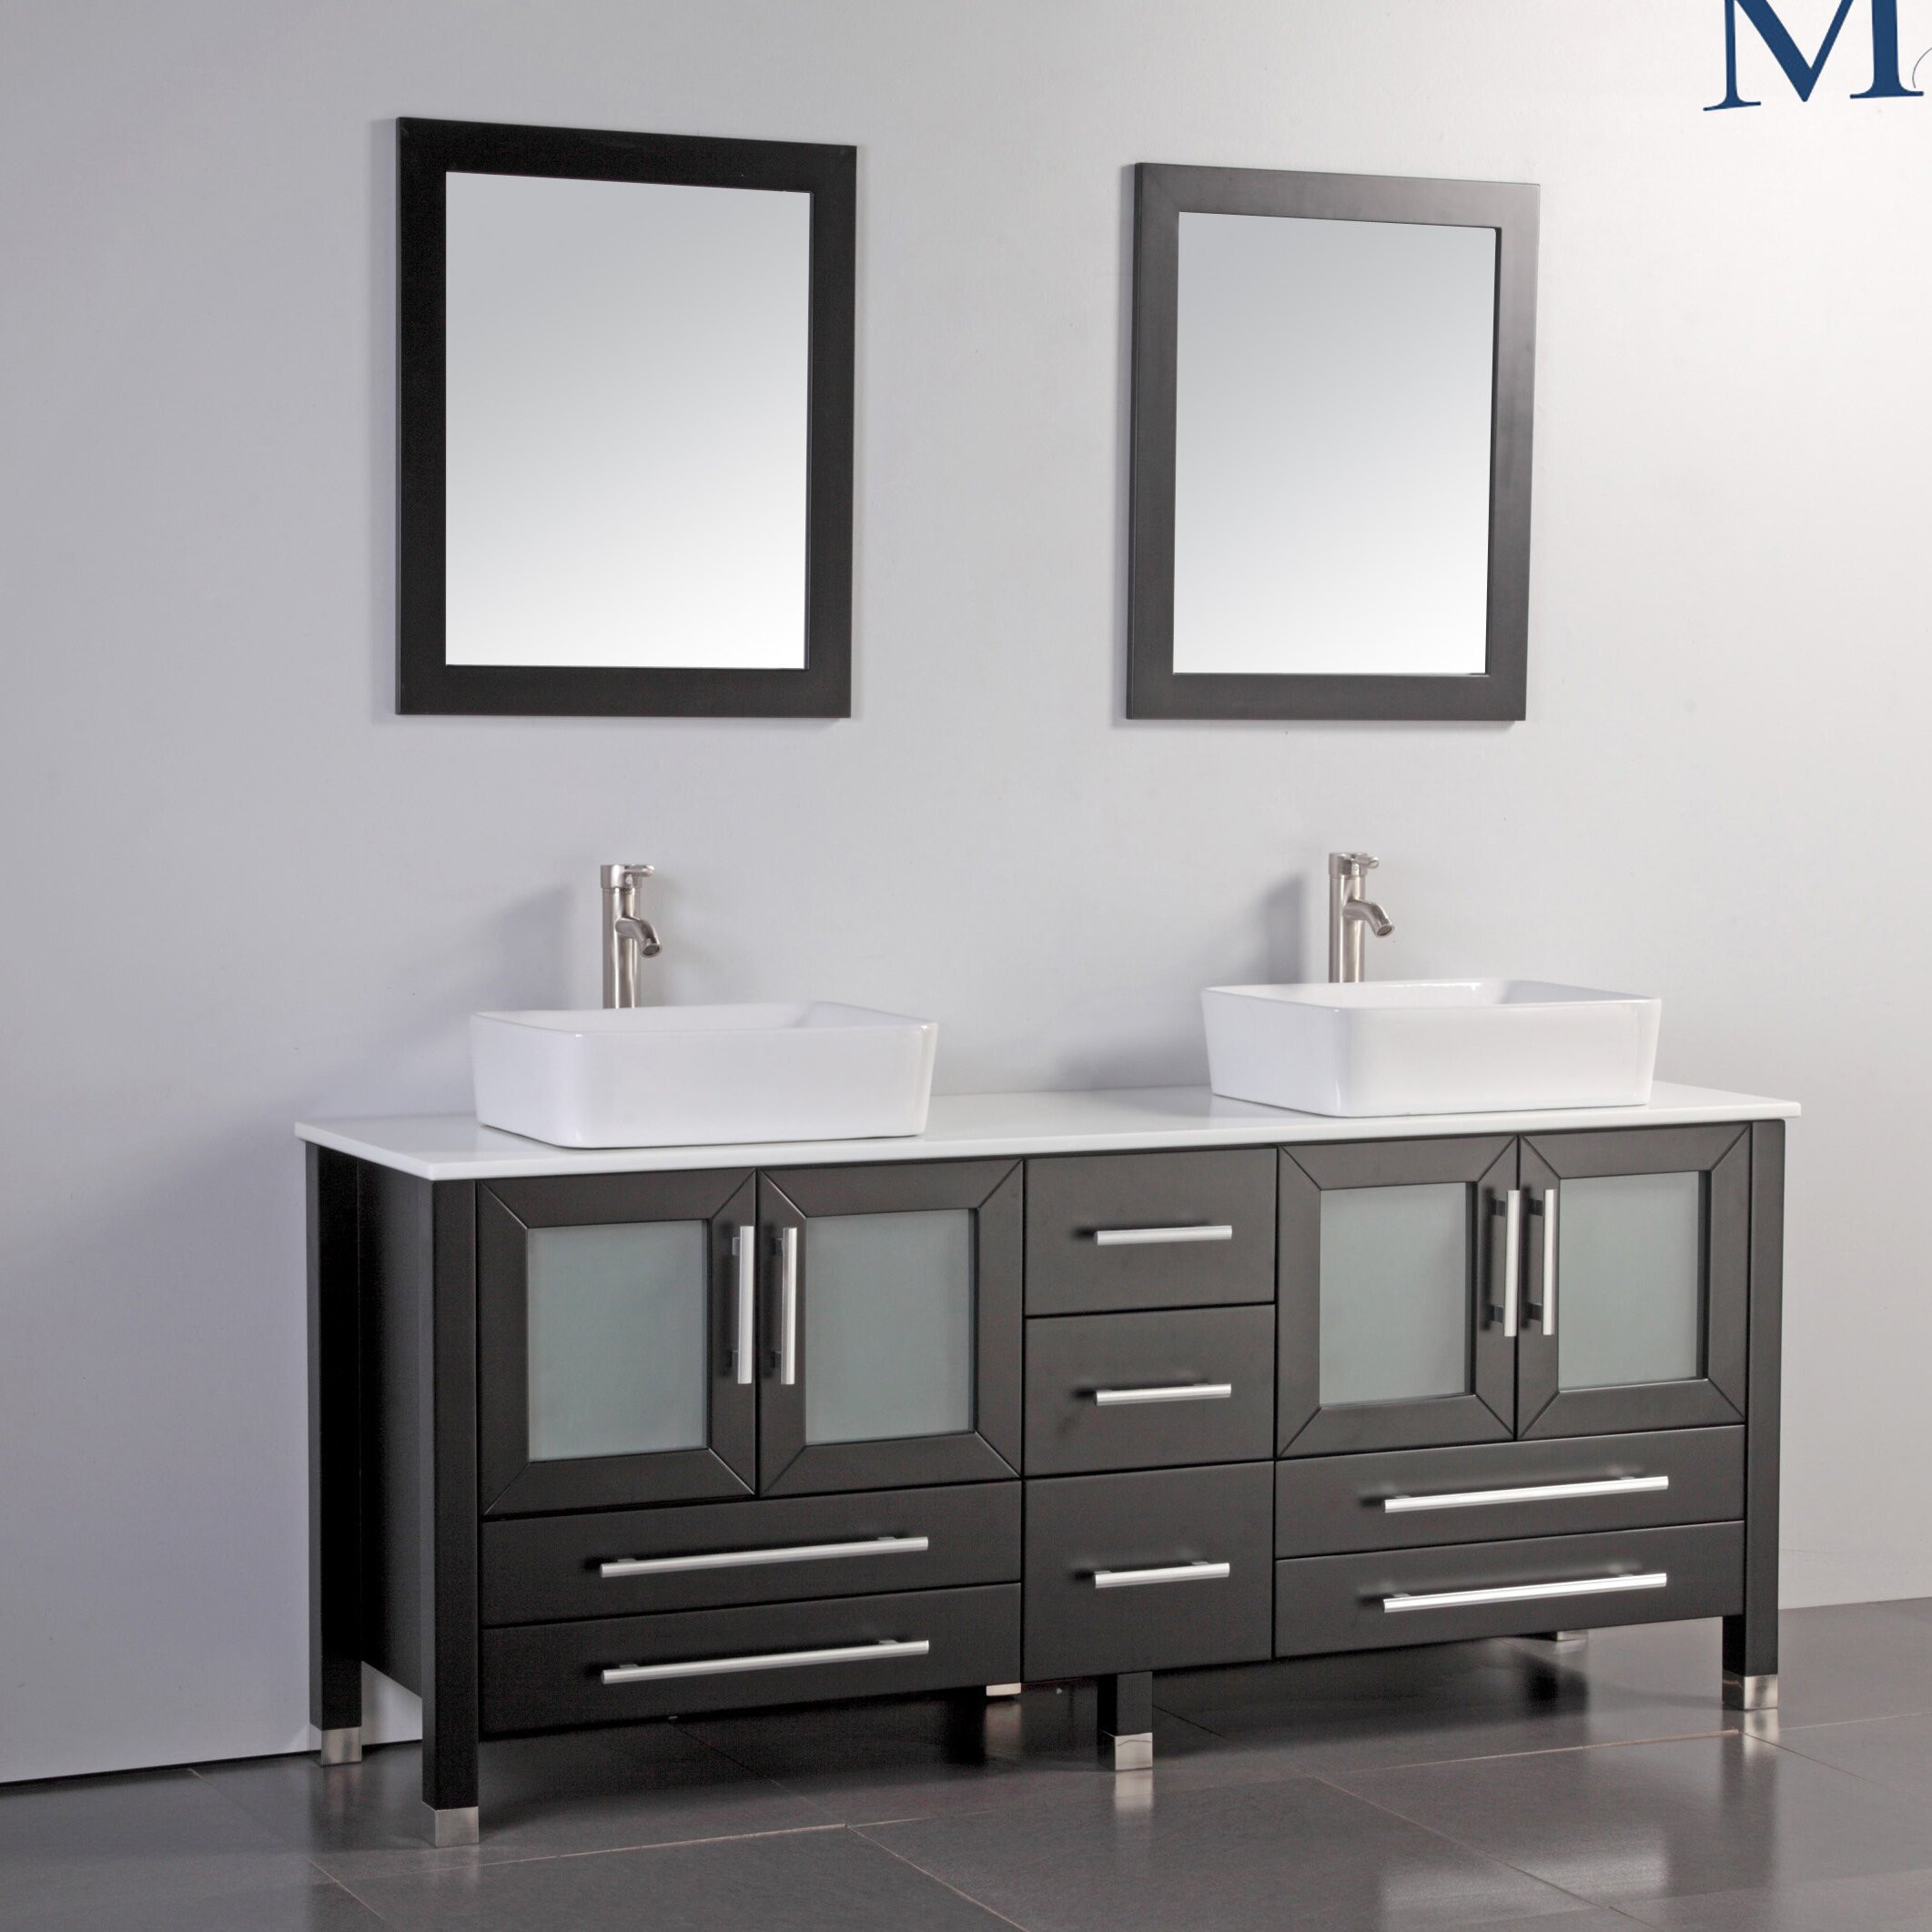 Wayfair Bathroom Mirrors
 MTDVanities Malta 61" Double Bathroom Vanity Set with